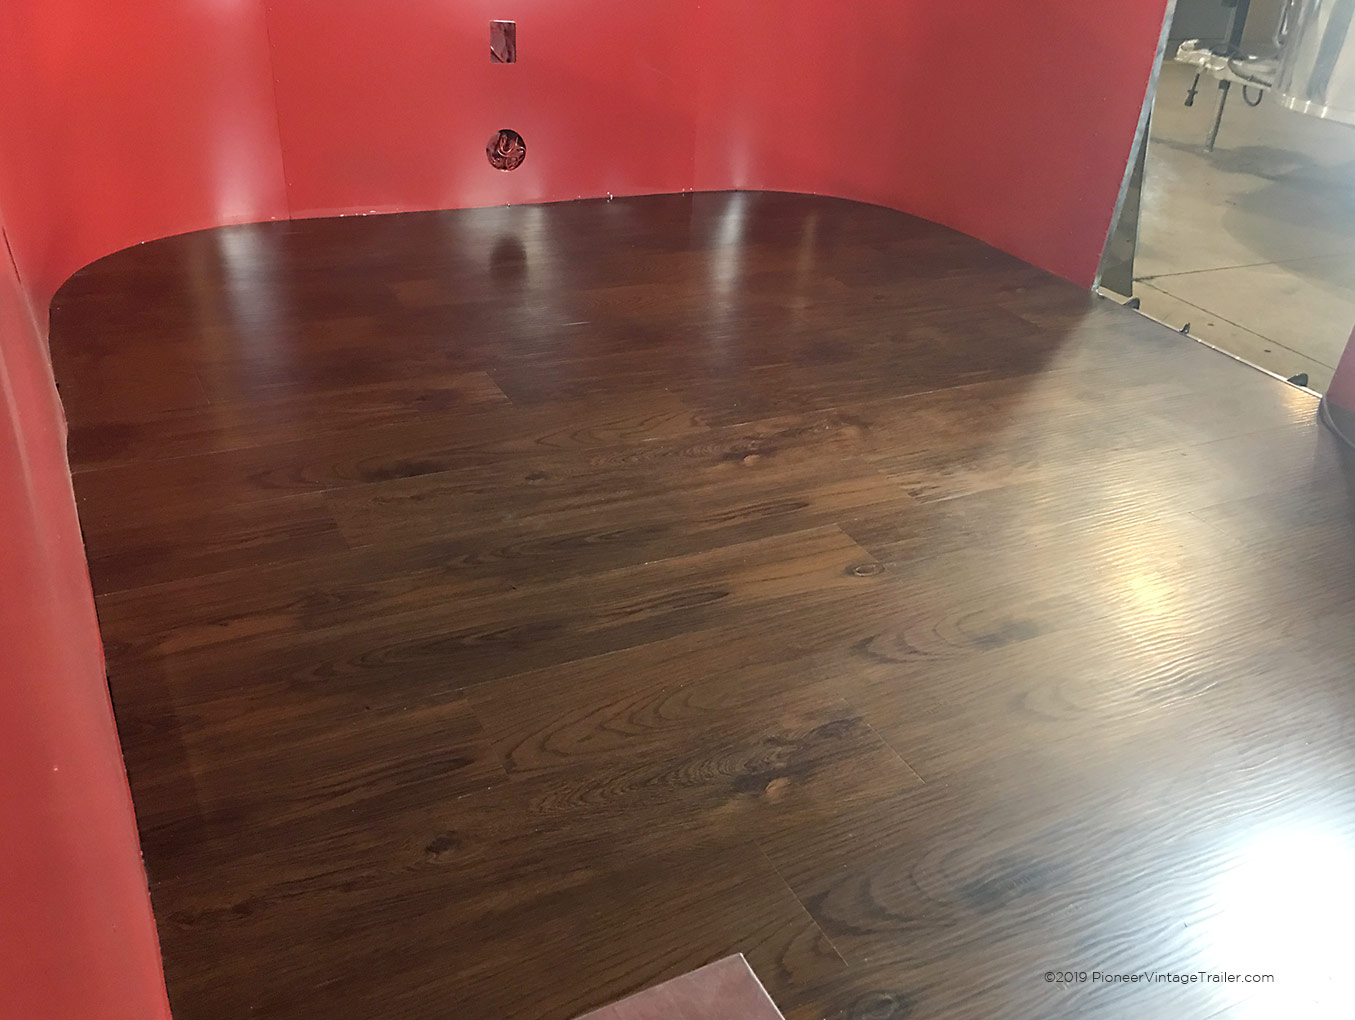 Airstream new plank vinyl floor - interior during construction